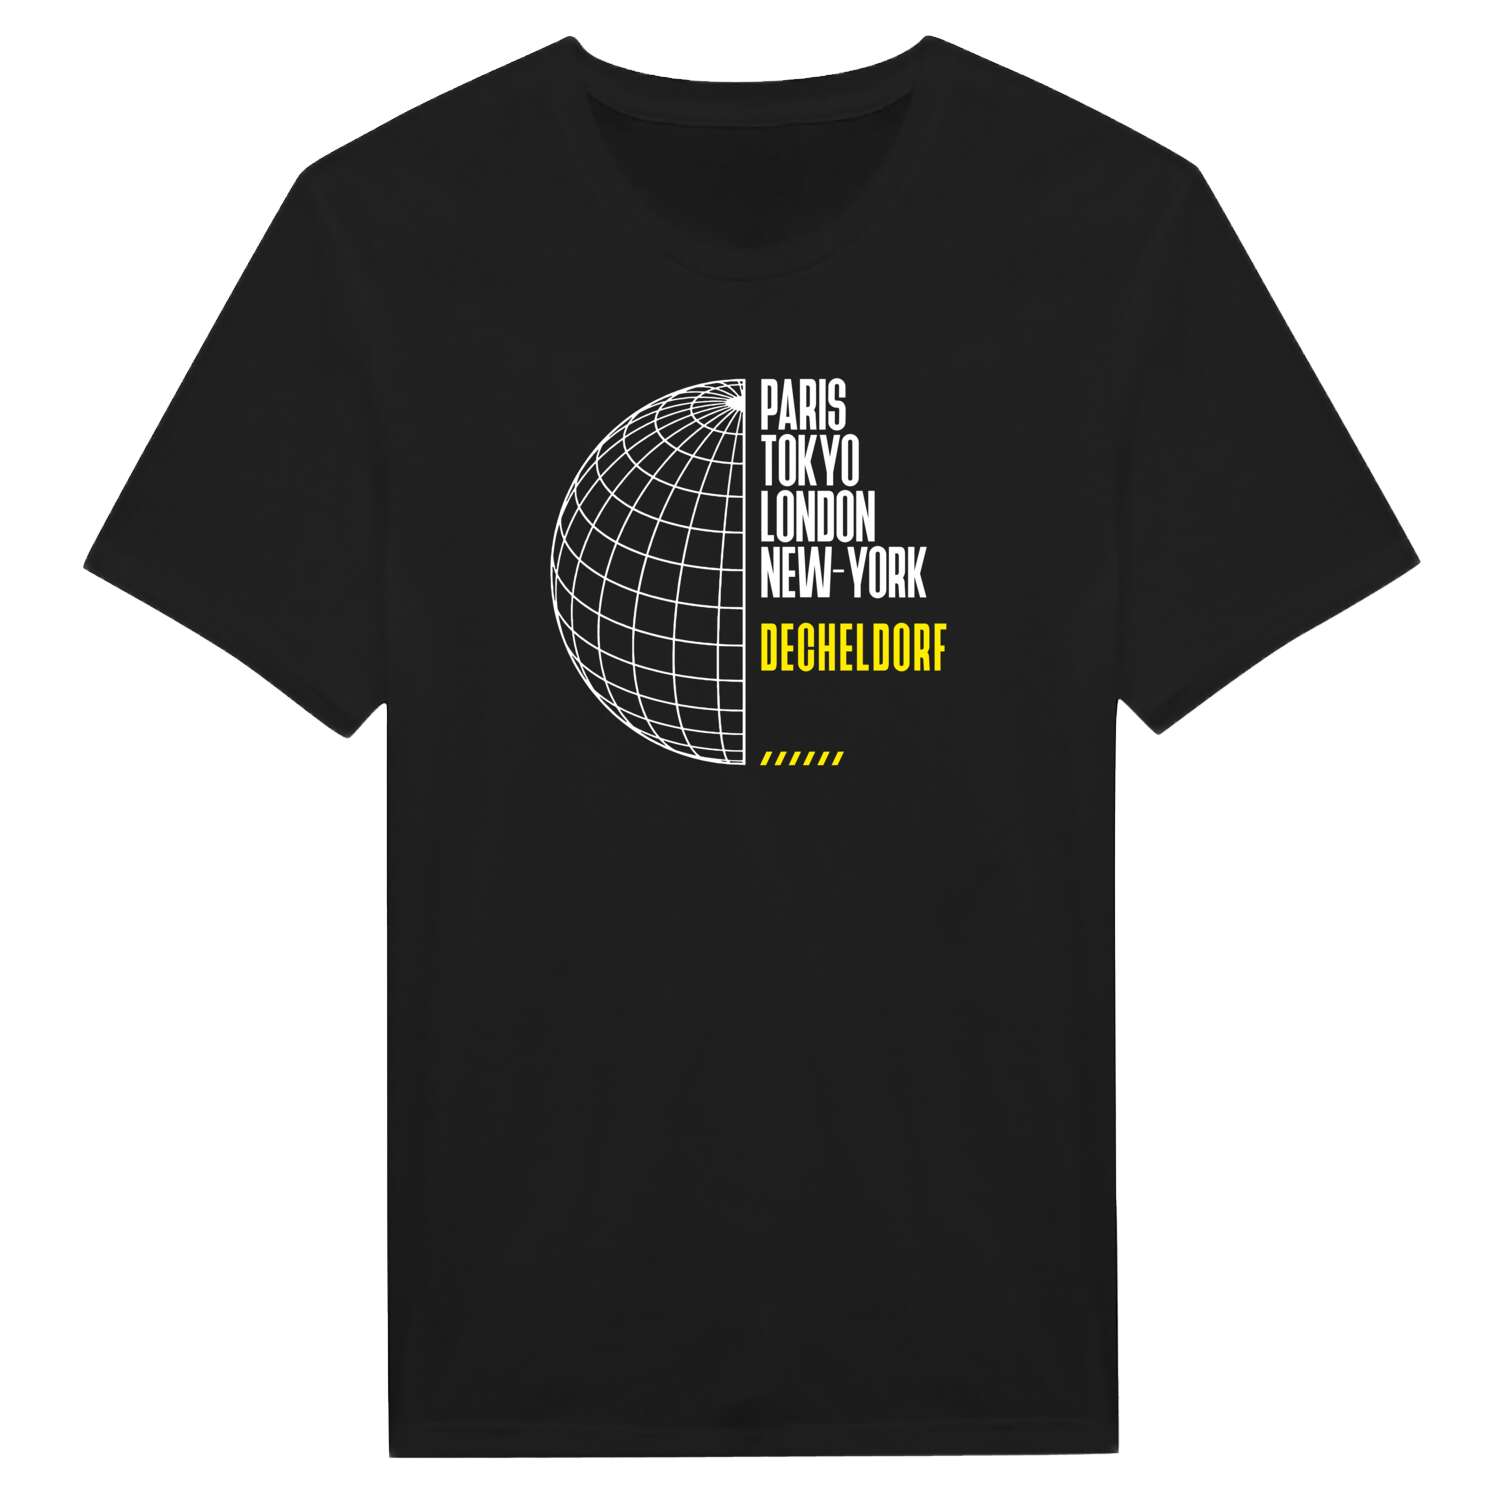 Decheldorf T-Shirt »Paris Tokyo London«